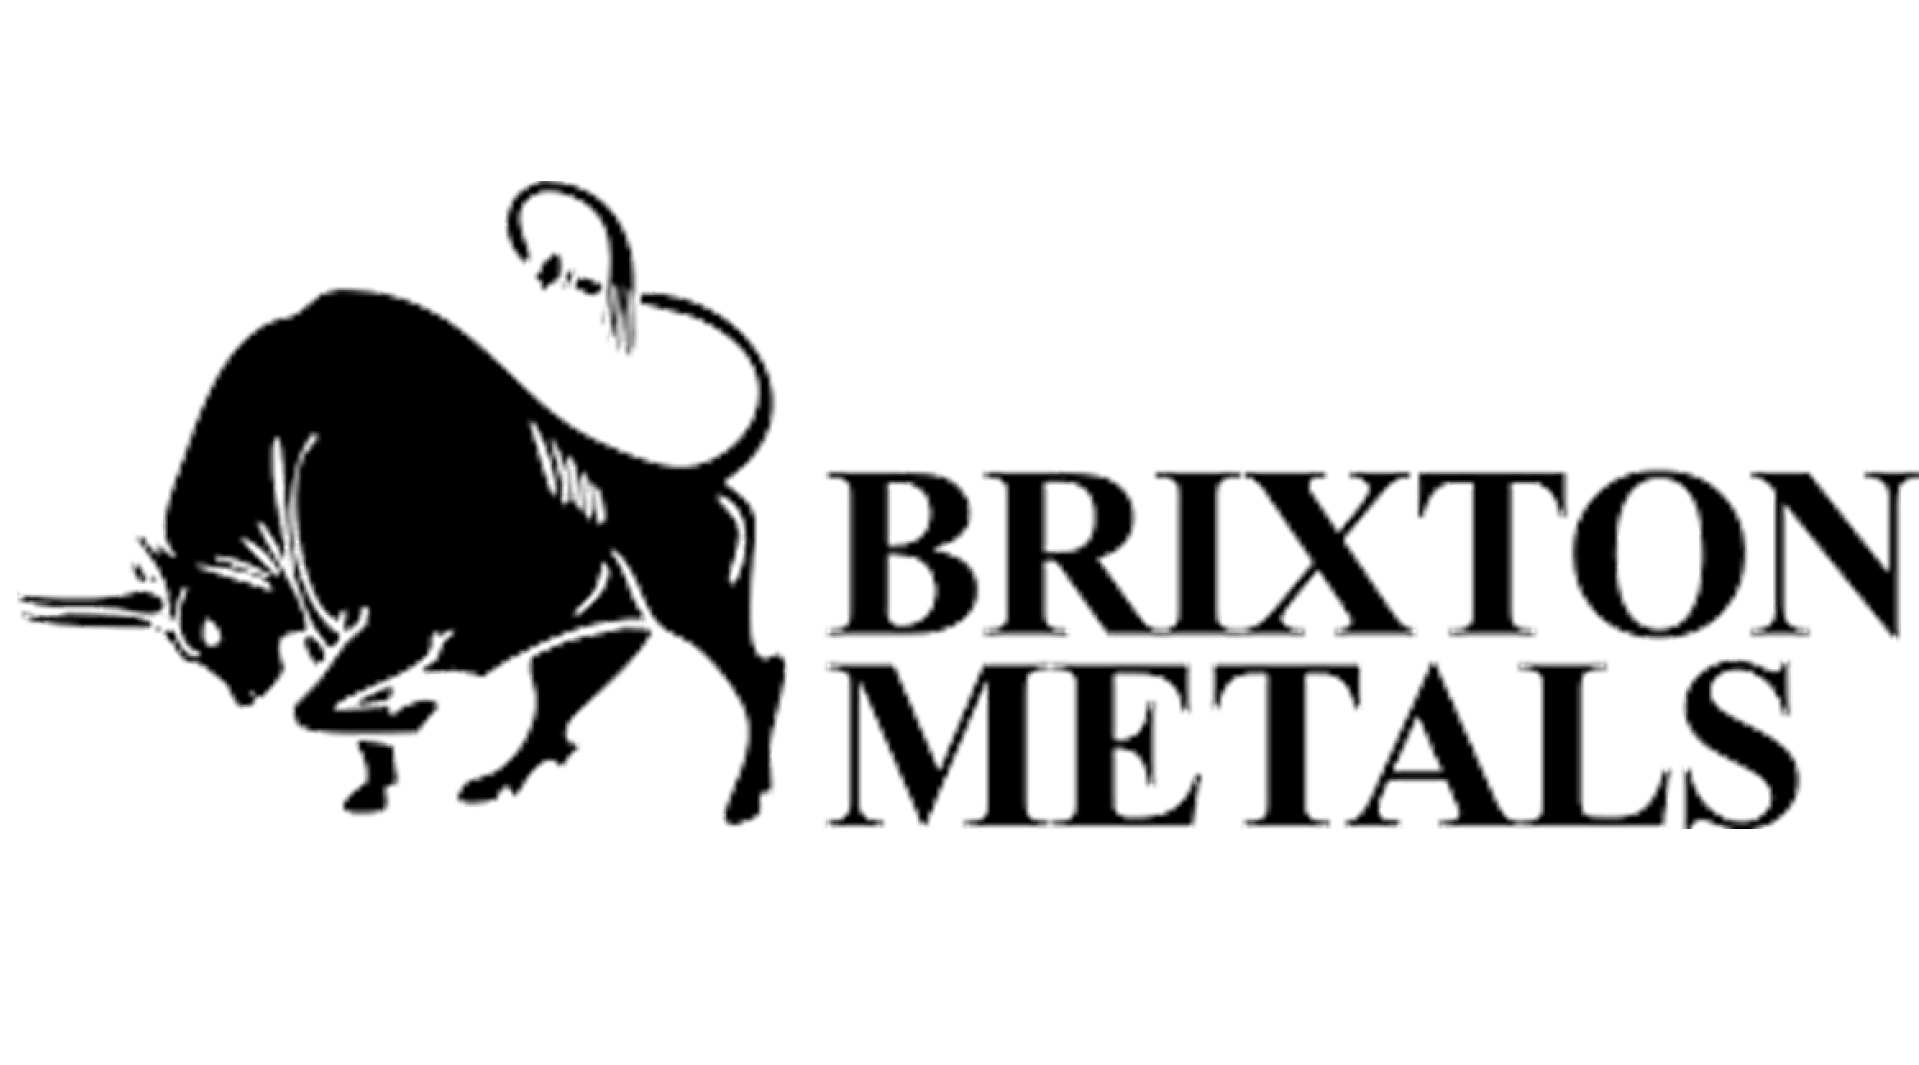 Brixton Metals Corporation